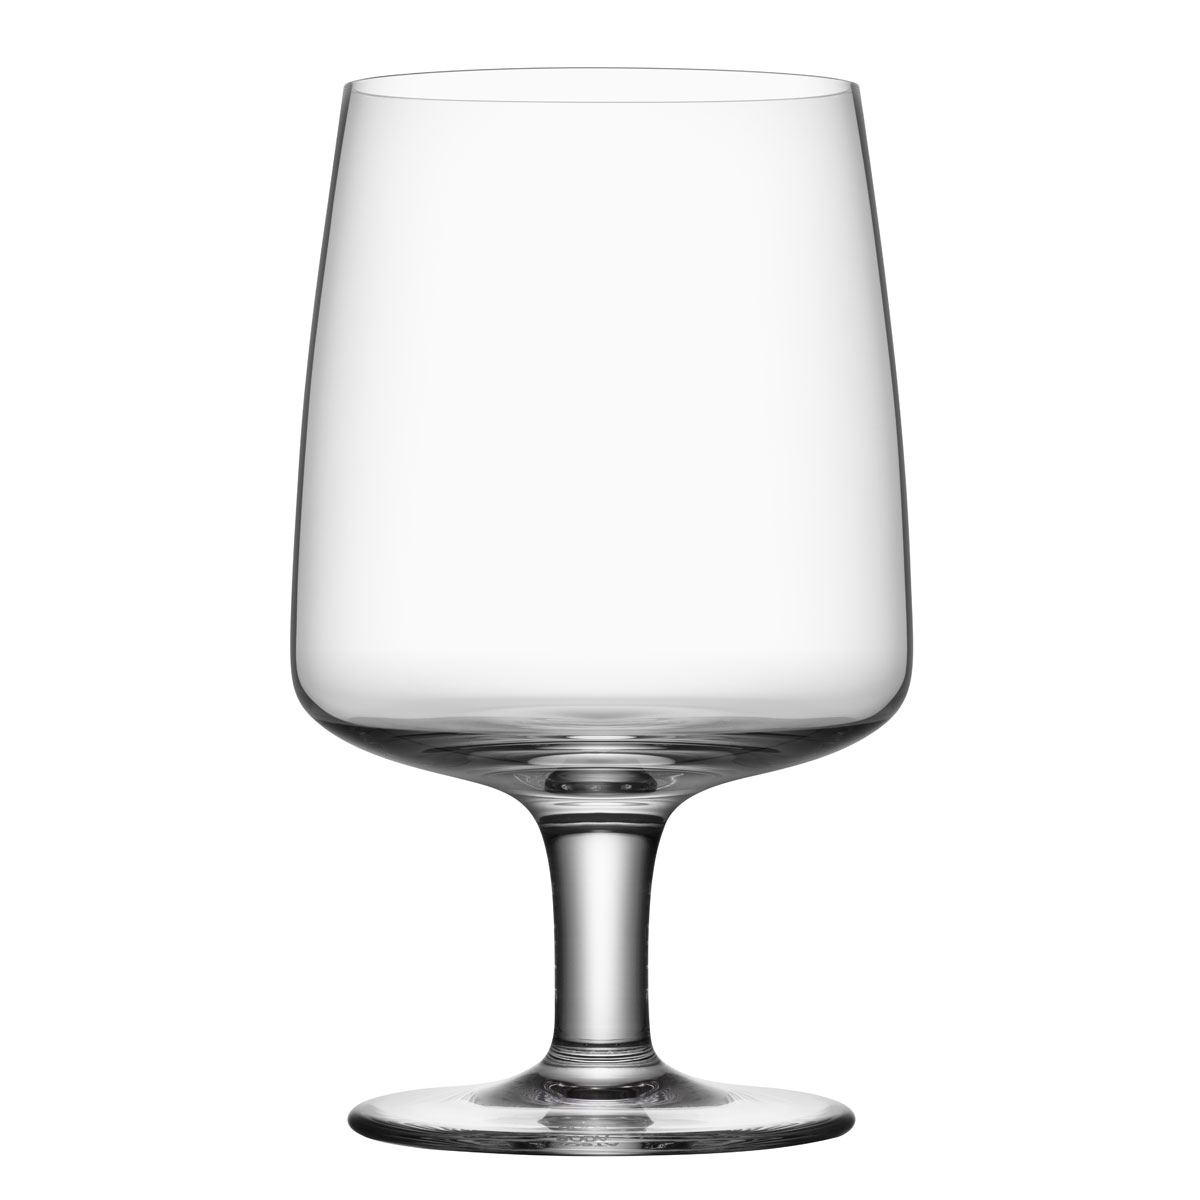 Kosta Boda Bruk Beverage Glass, Set of 4